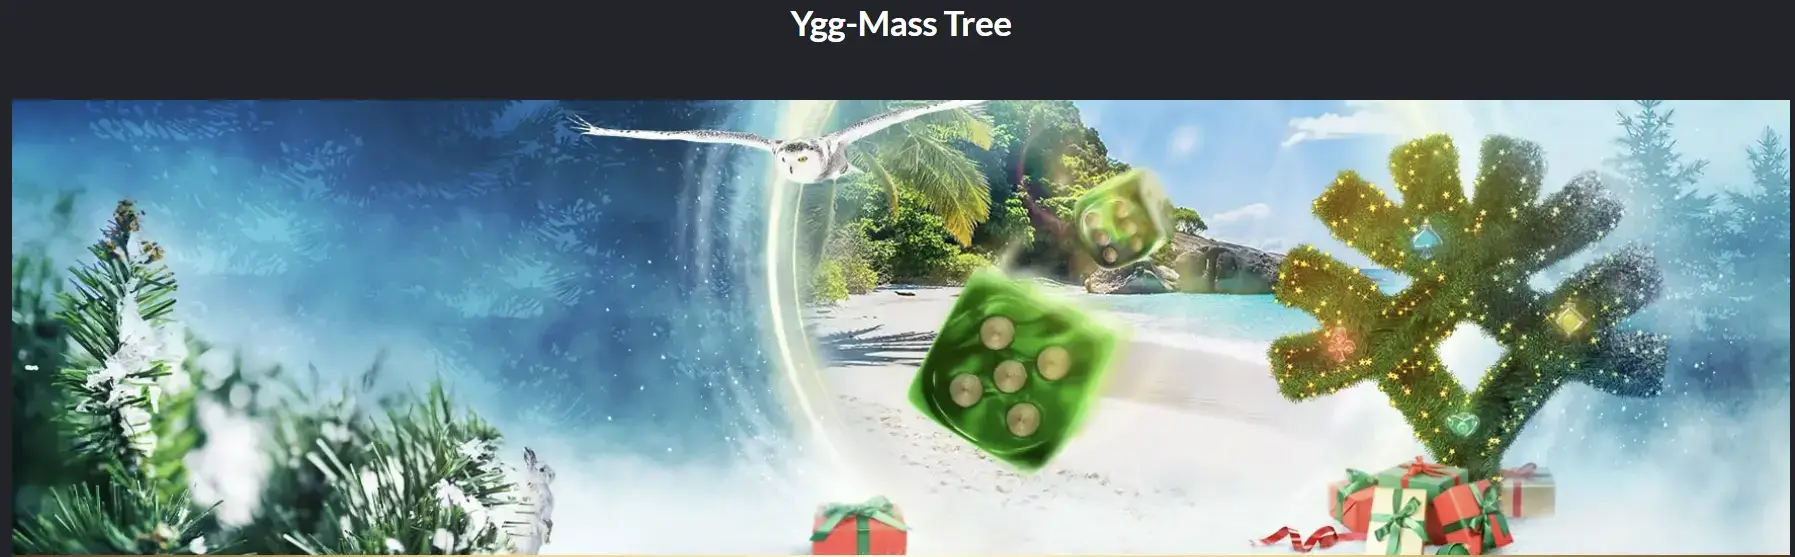 ygg_mass_tree_tortuga